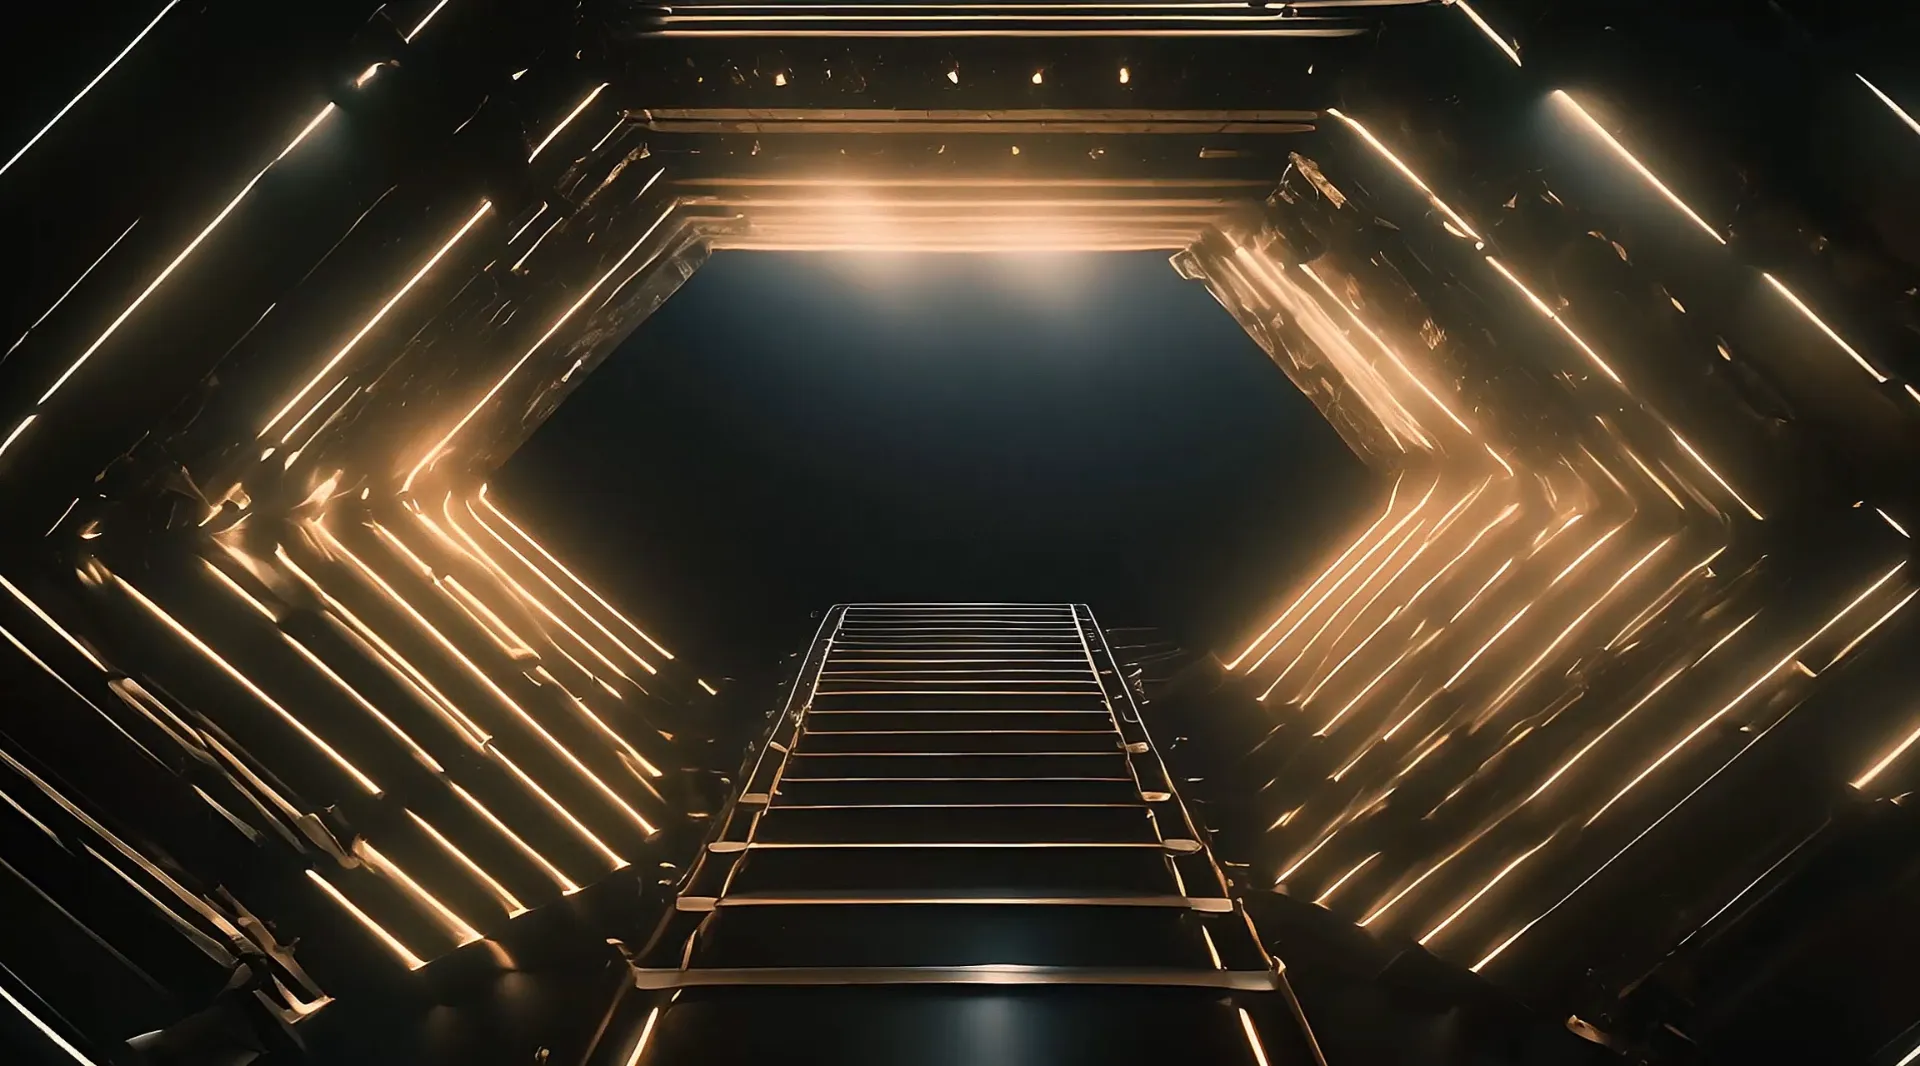 Glowing Neon Ladder in Dark Space High-Tech Video Backdrop